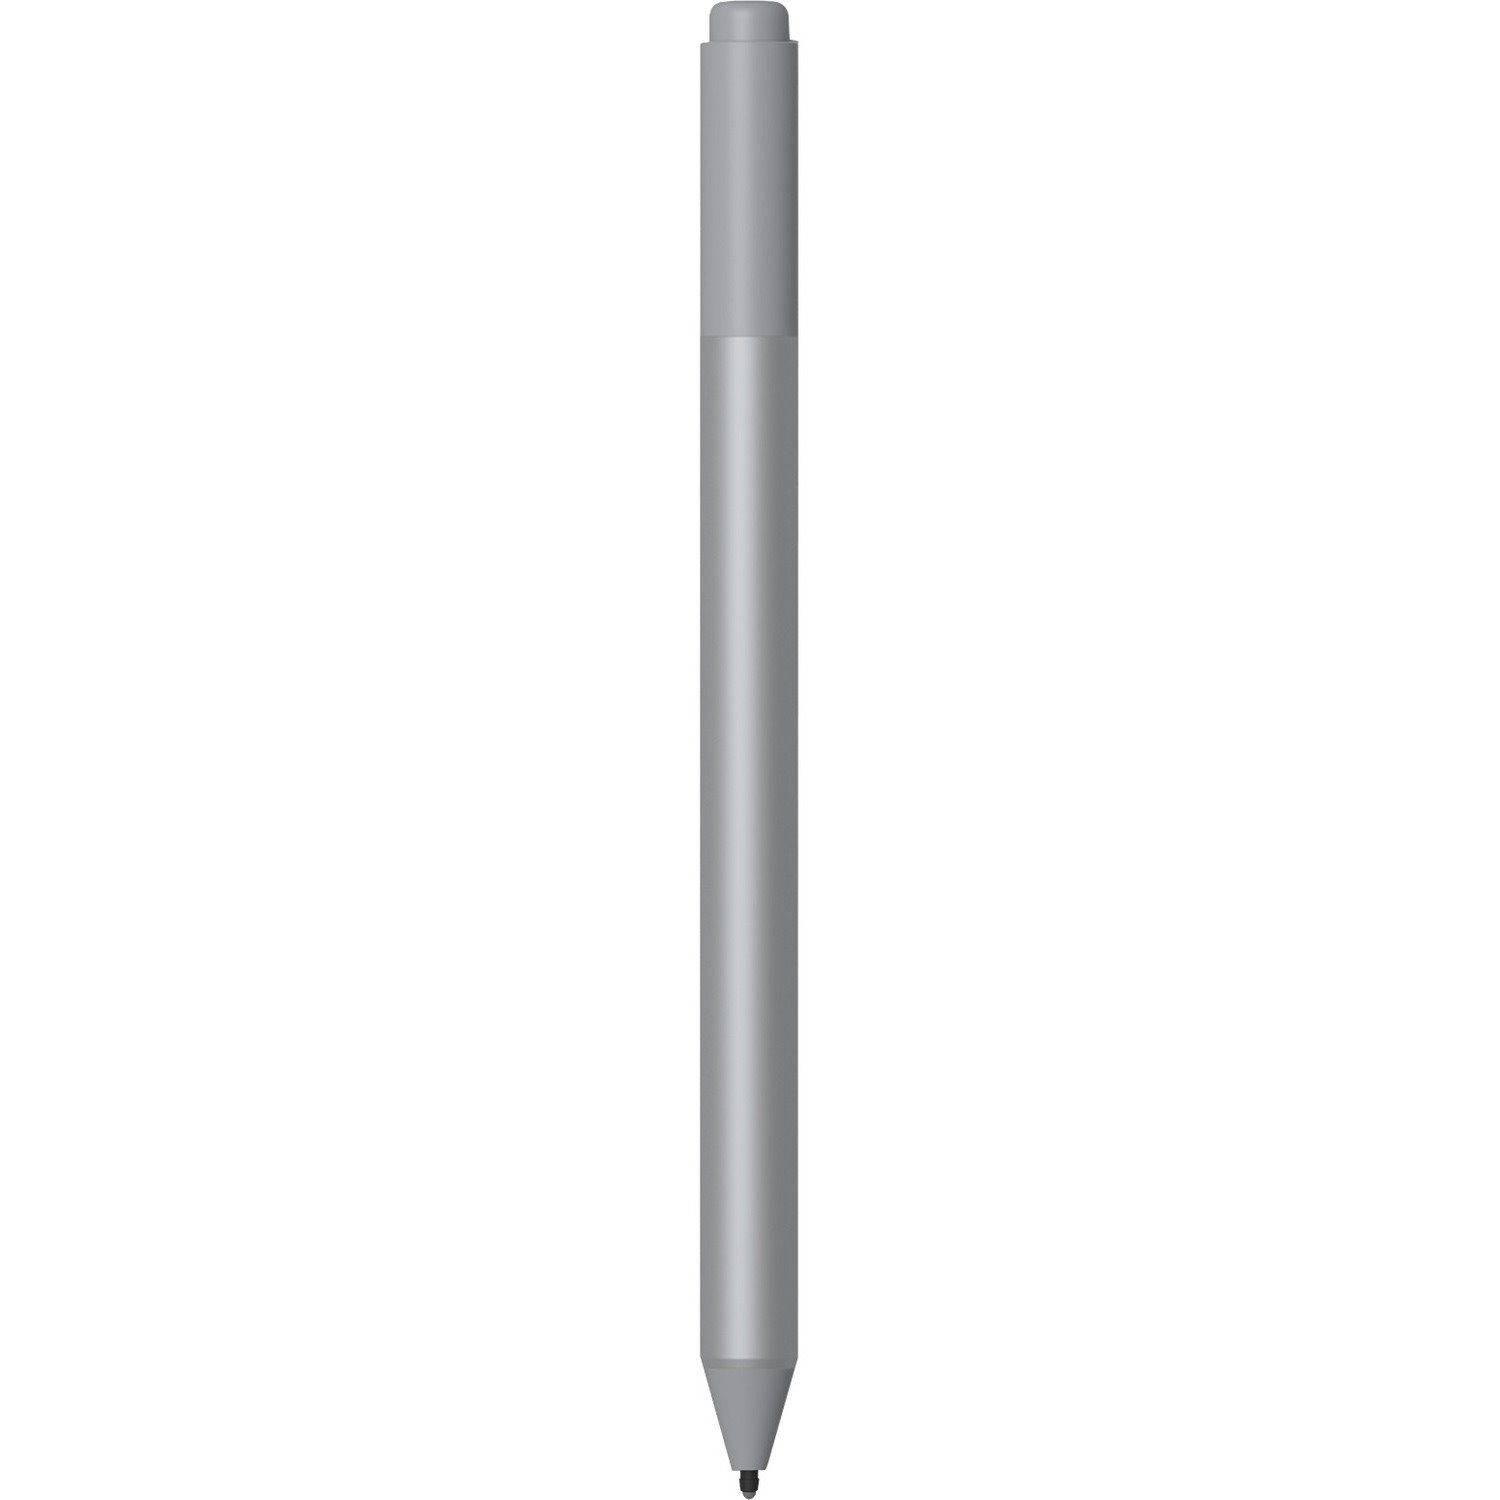 Microsoft Surface Pen Bluetooth Stylus - Silver 